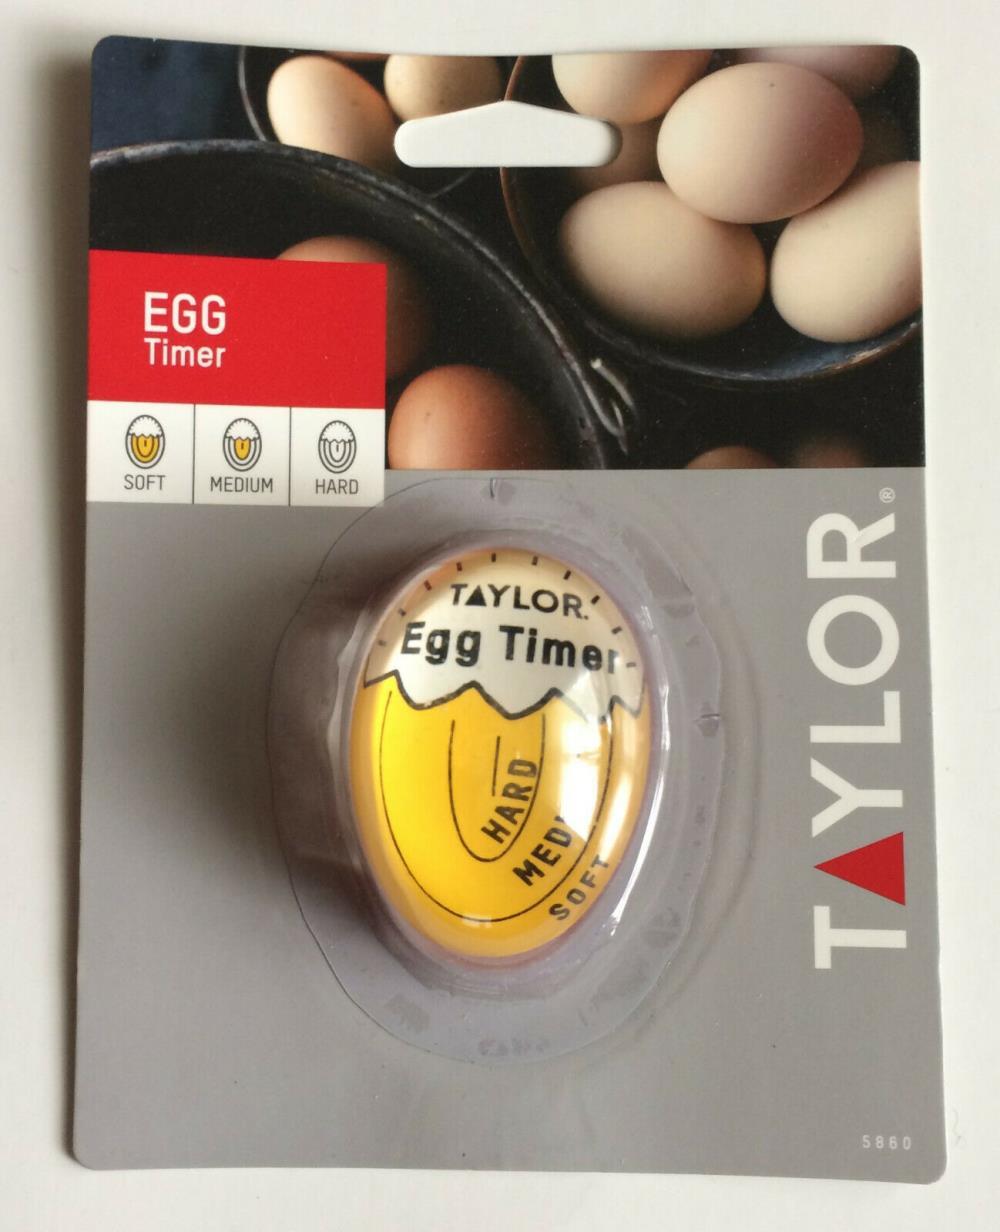 Taylor 5860 Egg Timer นาฬิกาจับเวลาไข่ต้ม